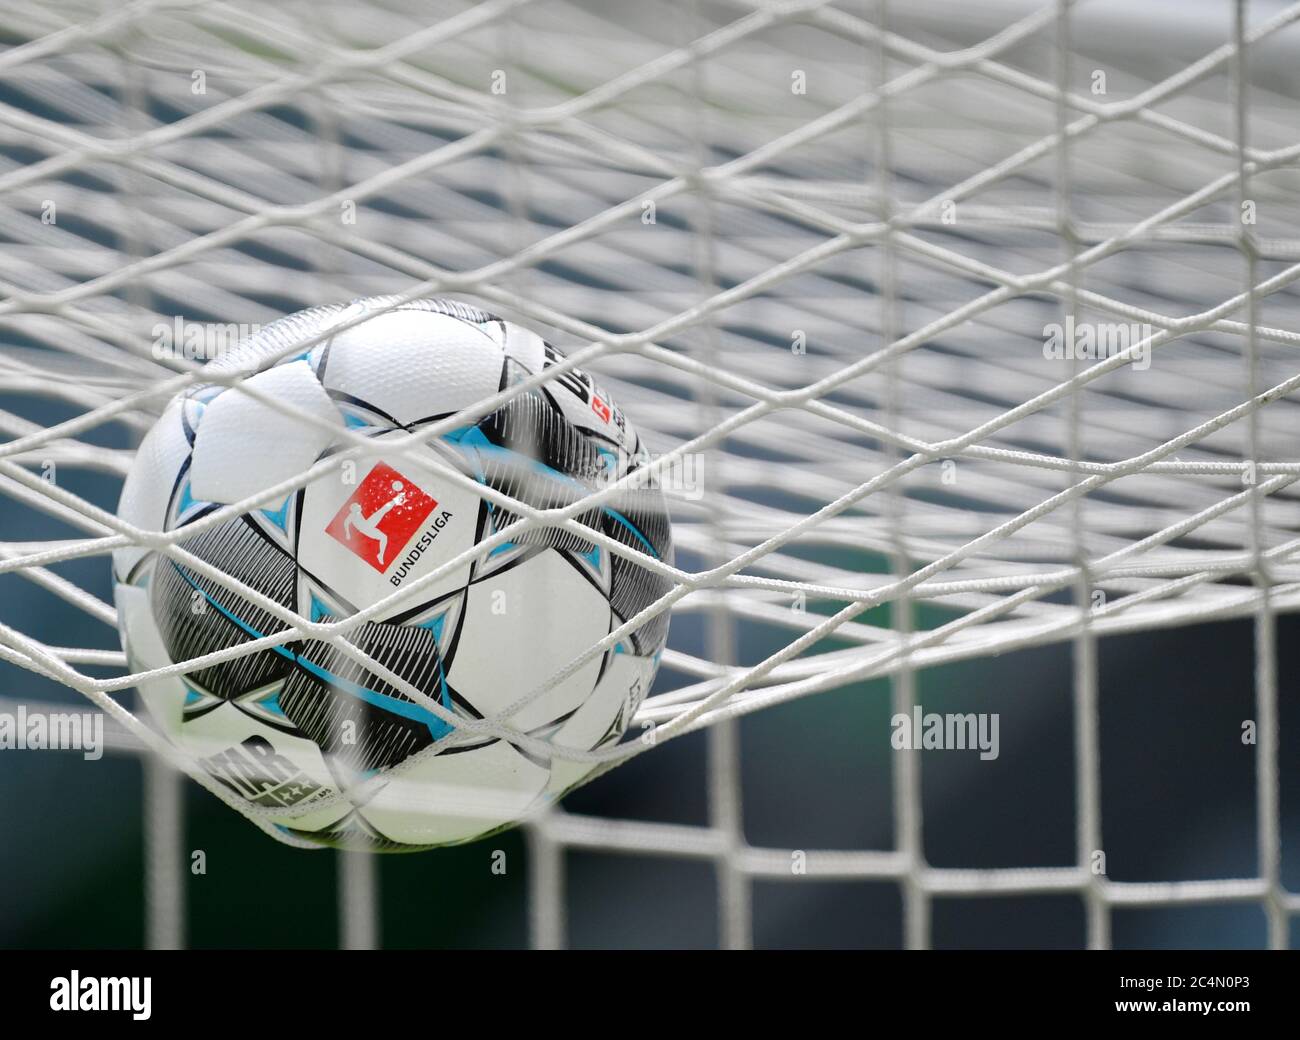 Official dfl bundesliga game ball derbystar hi-res stock photography and  images - Alamy